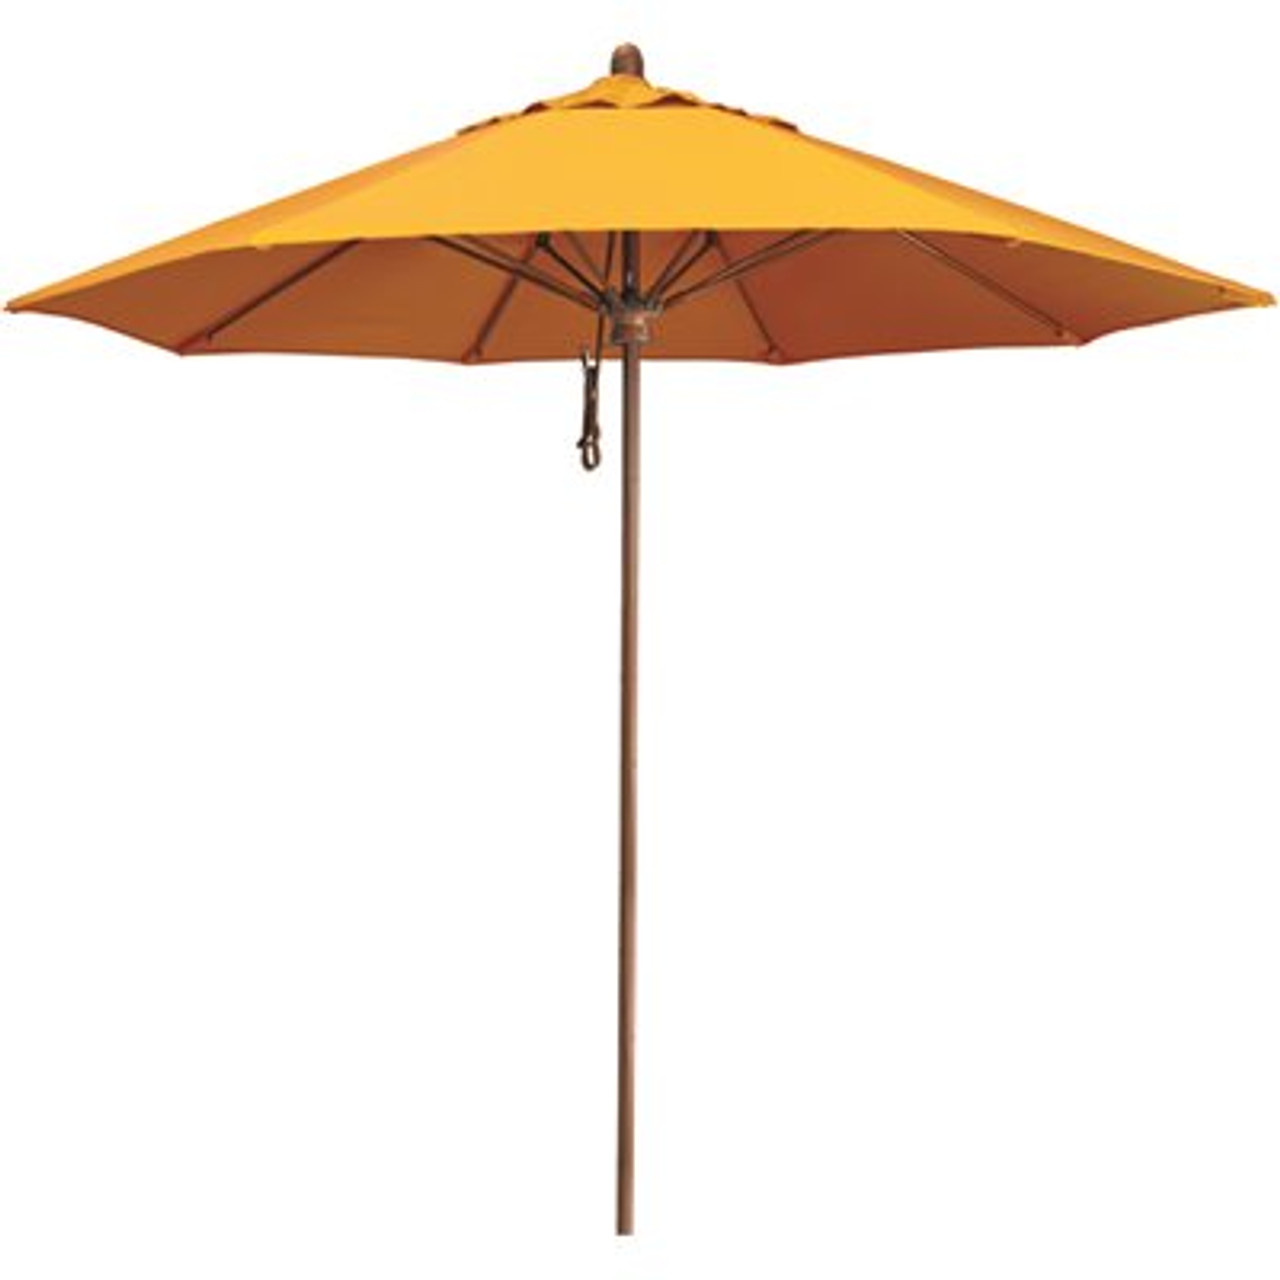 9 ft. Woodgrain Aluminum Commercial Market Patio Umbrella Fiberglass Ribs and Pulley Lift in Sunflower Yellow Sunbrella